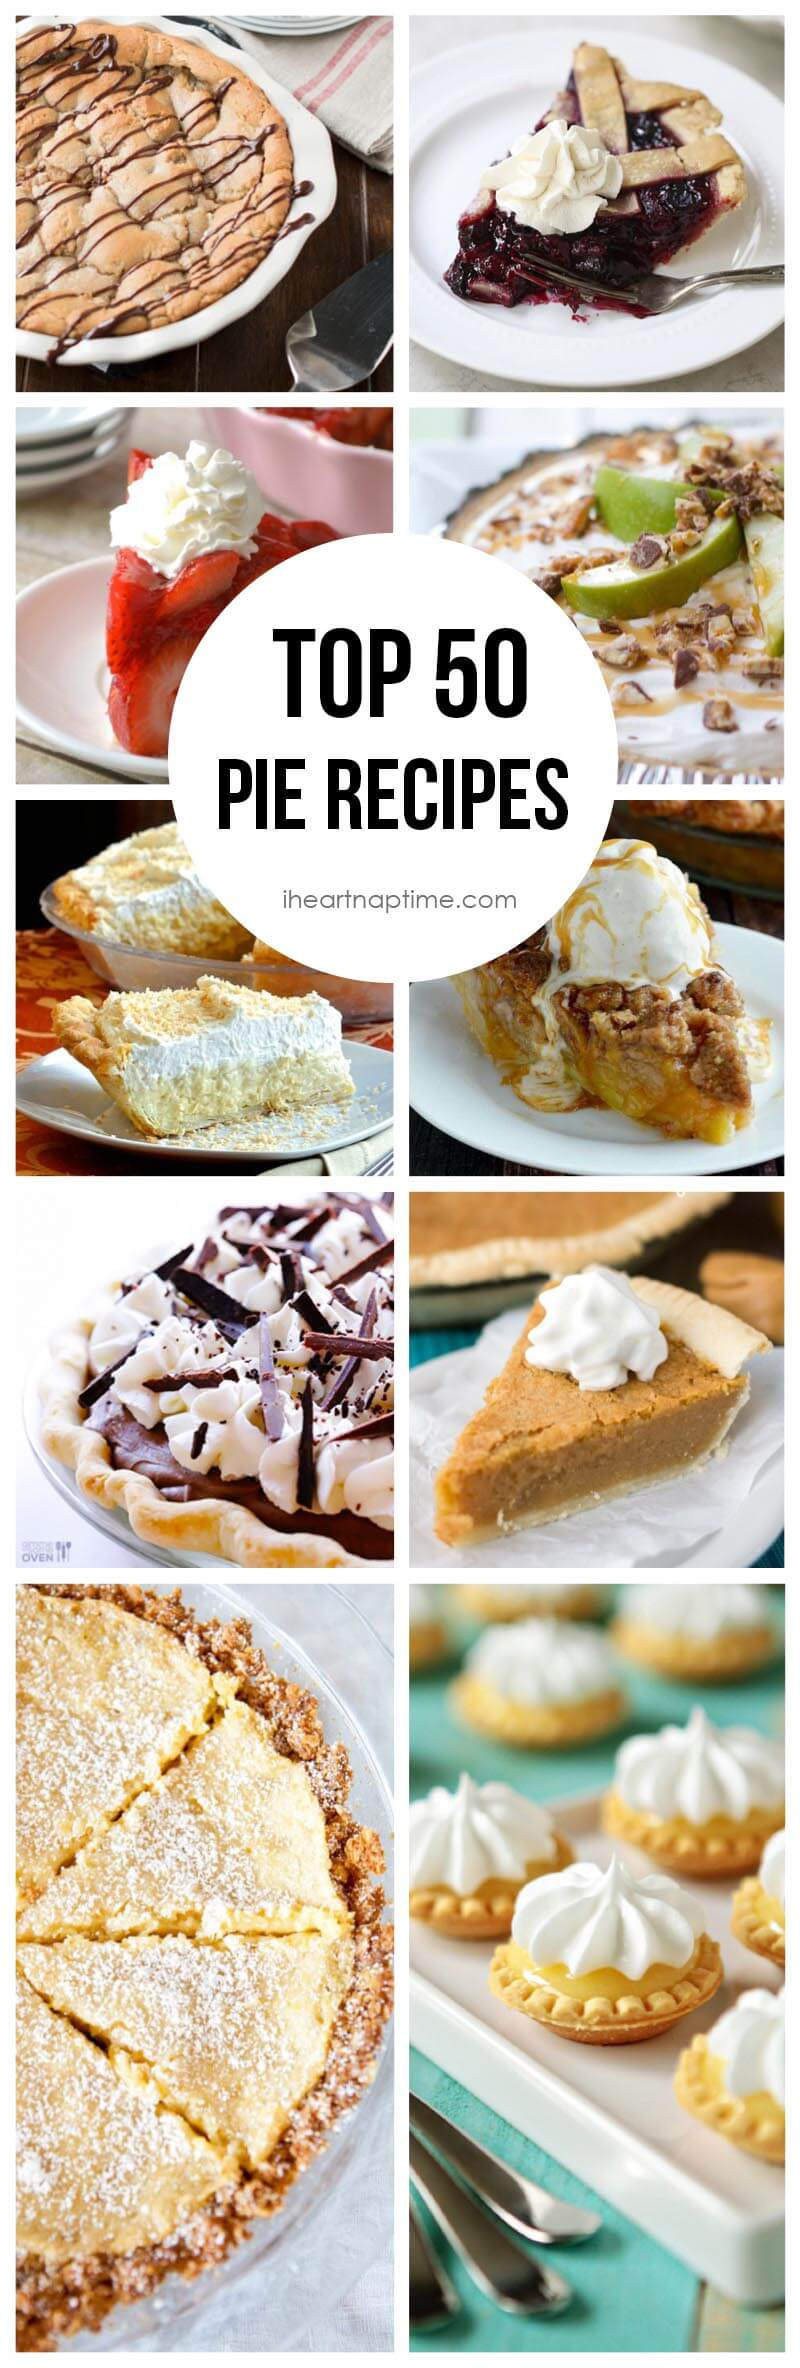 Thanksgiving Pie Recipes
 Top 50 Pie Recipes I Heart Nap Time